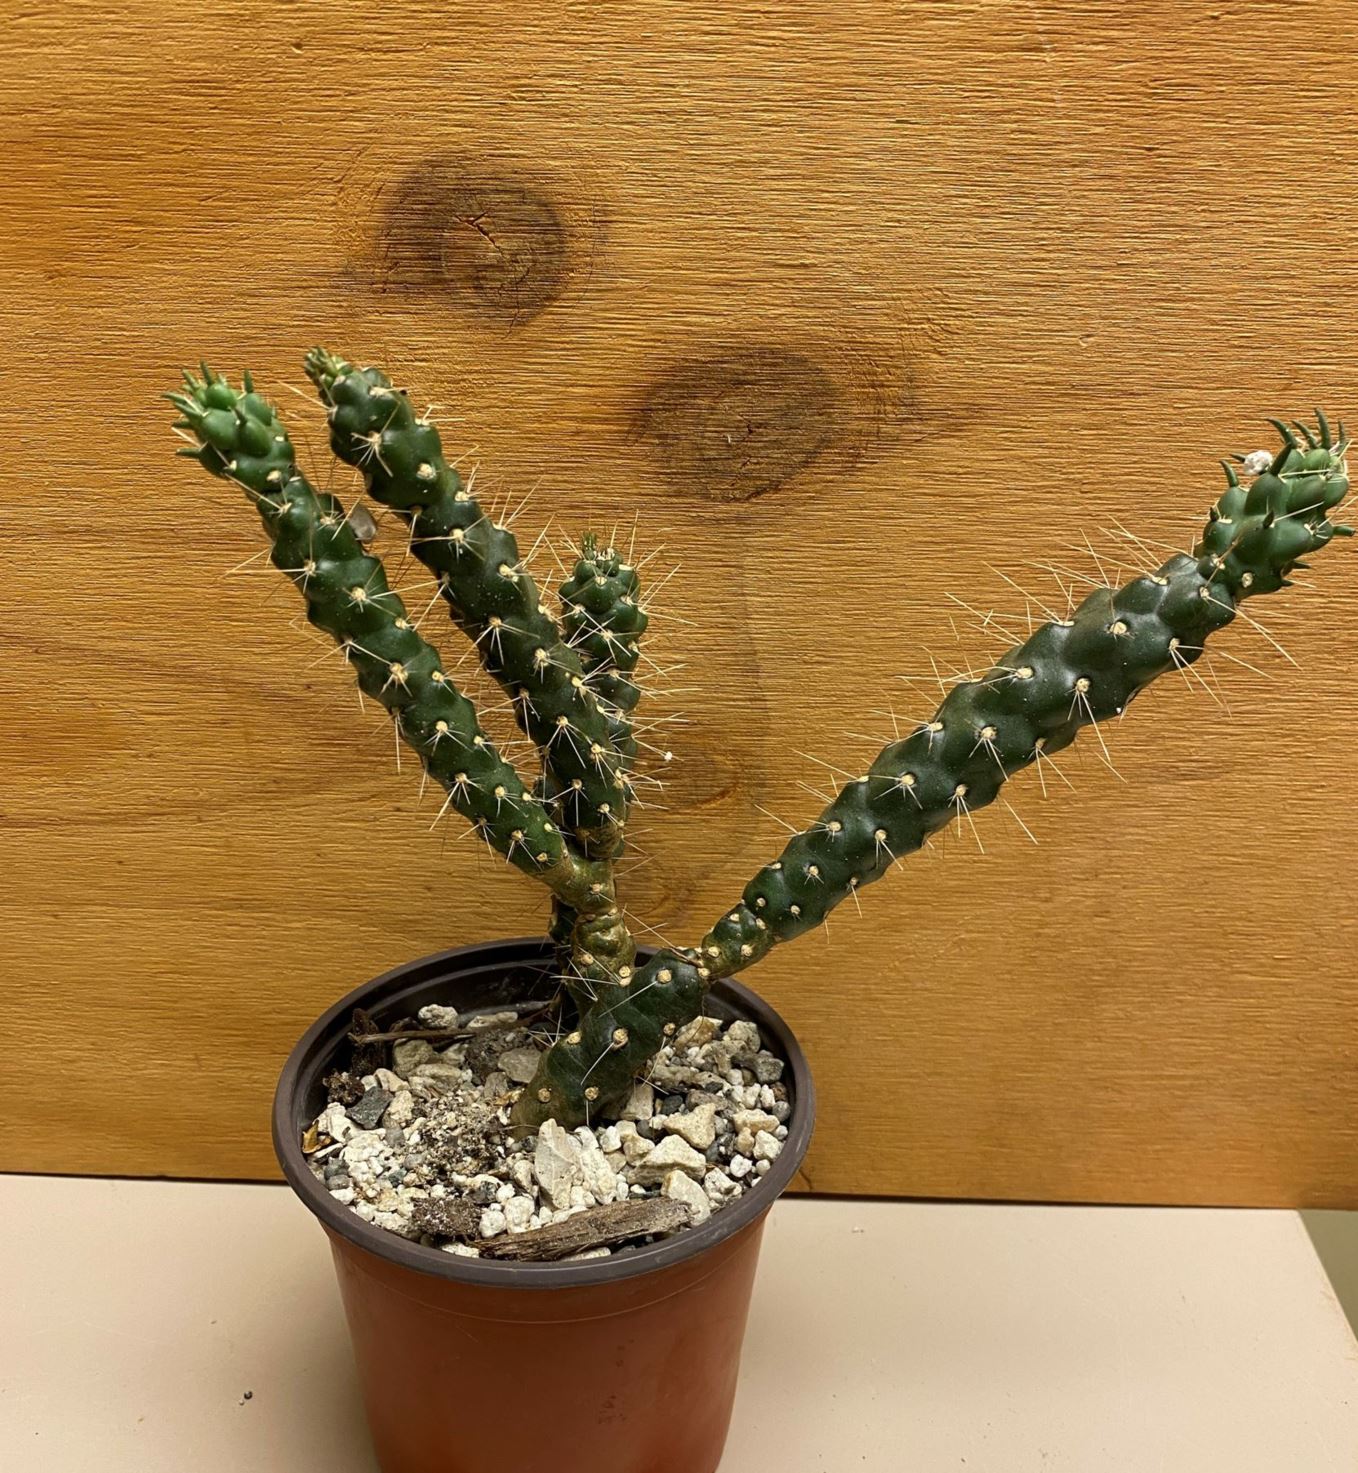 Cylindropuntia sp. - cholla cactus